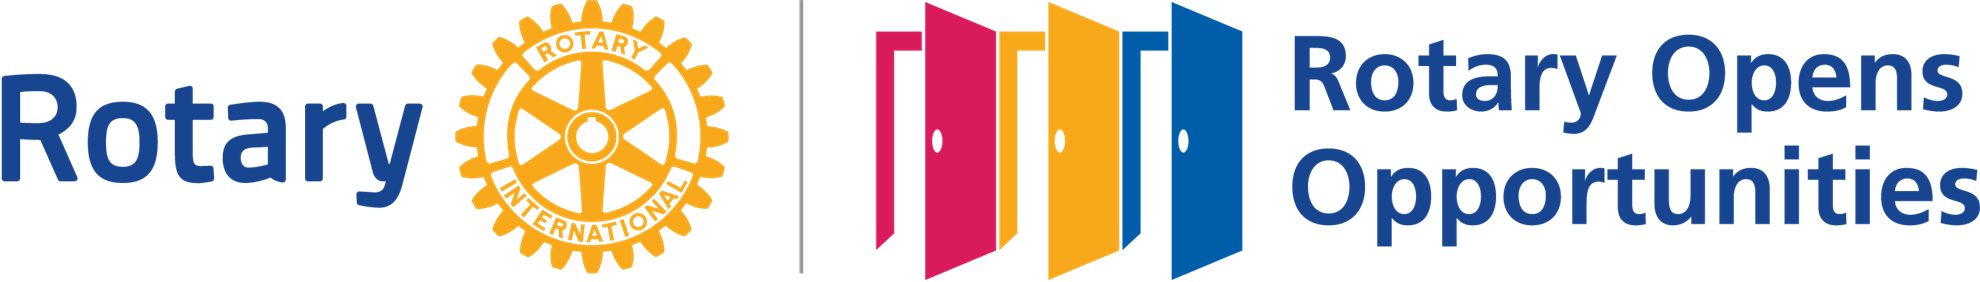 Rotary International Logo 2020 - KibrisPDR